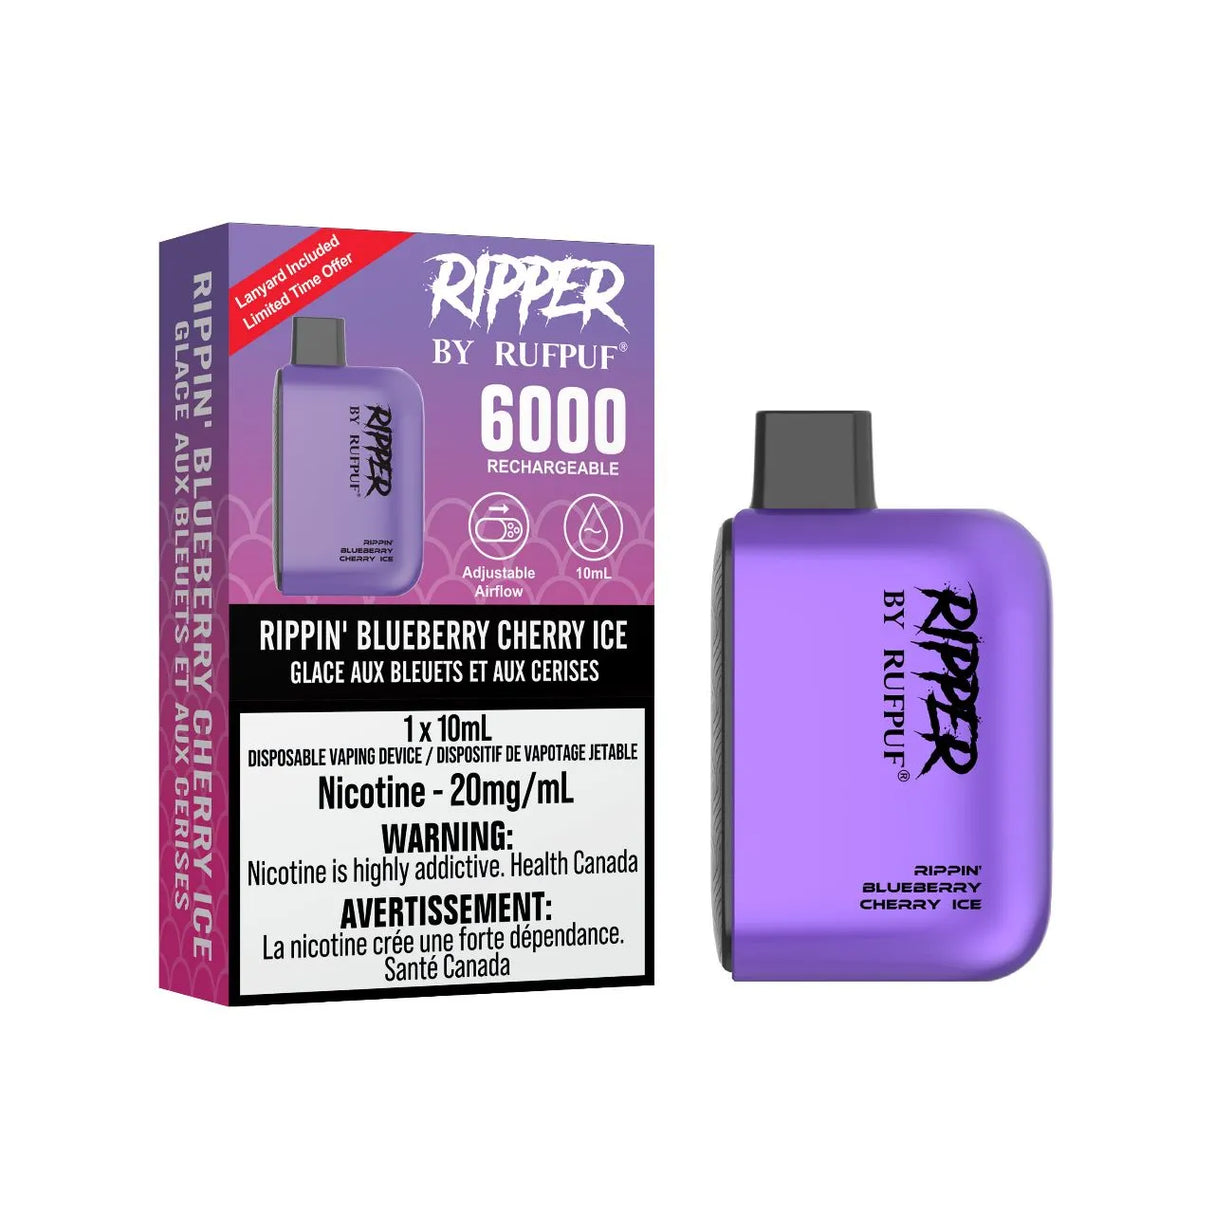 Rippin’ Blueberry Cherry Ice  -Rufpuf Ripper 6000